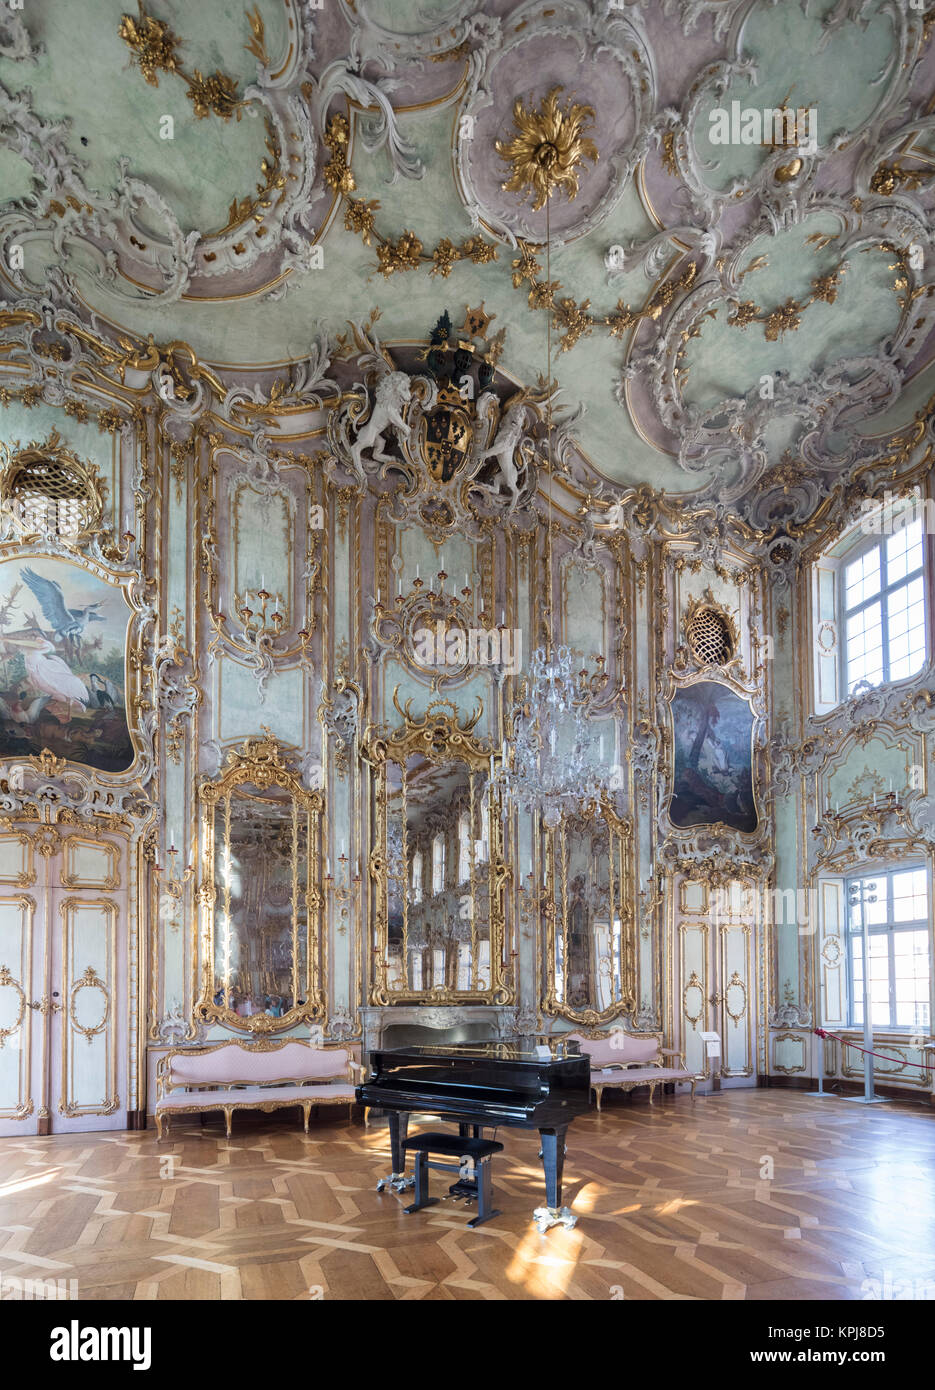 Rococco ballroom (1770) of the Schaezlerpalais baroque palace, Augsburg, Bavaria, Germany Stock Photo